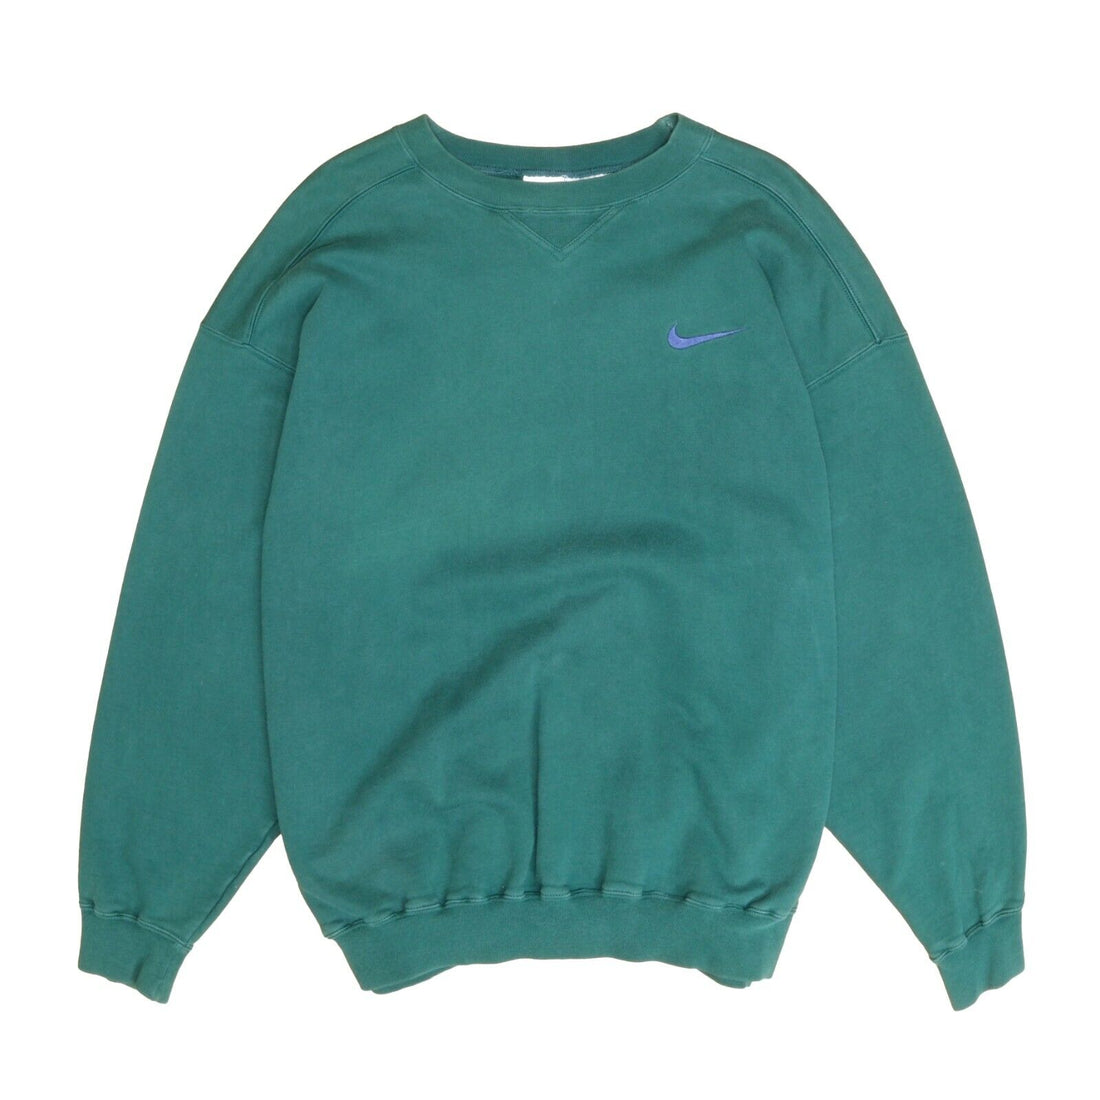 Vintage Nike Sweatshirt Crewneck Size XL Green Blue Embroidered Swoosh 90s